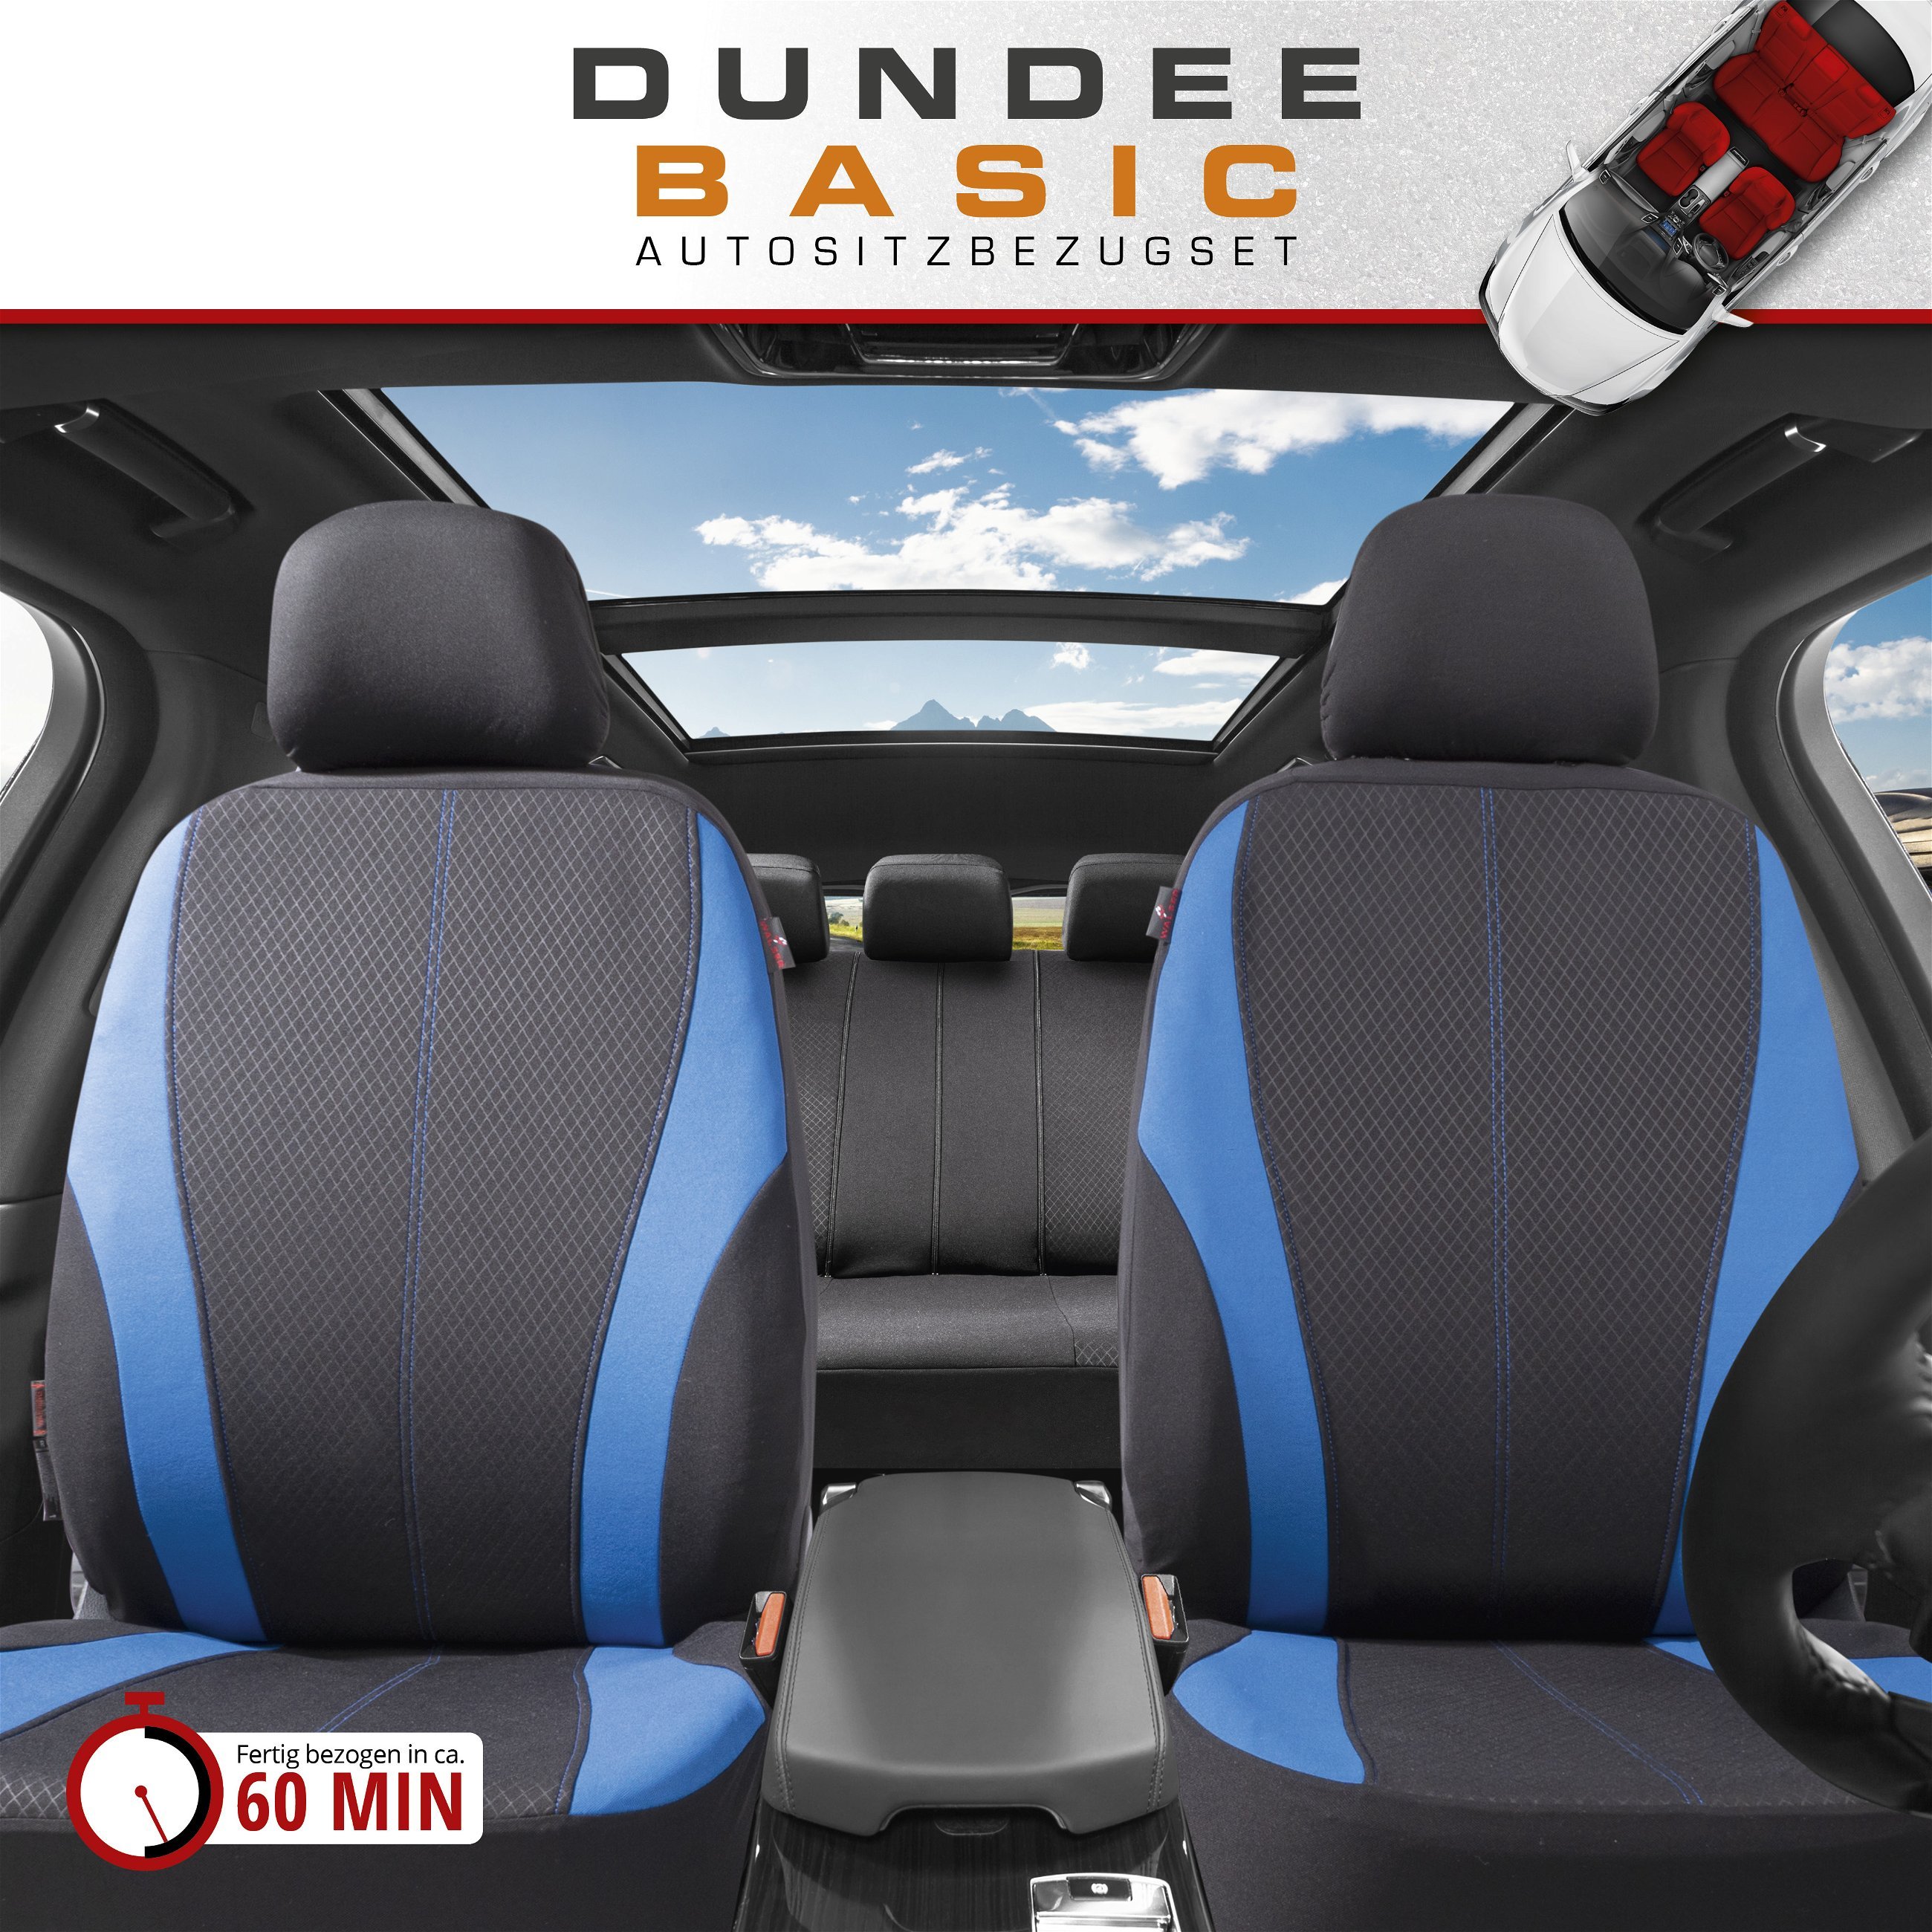 Autositzbezug ZIPP-IT Dundee, PKW-Schonbezüge Komplettset mit Reißverschluss-System schwarz/blau